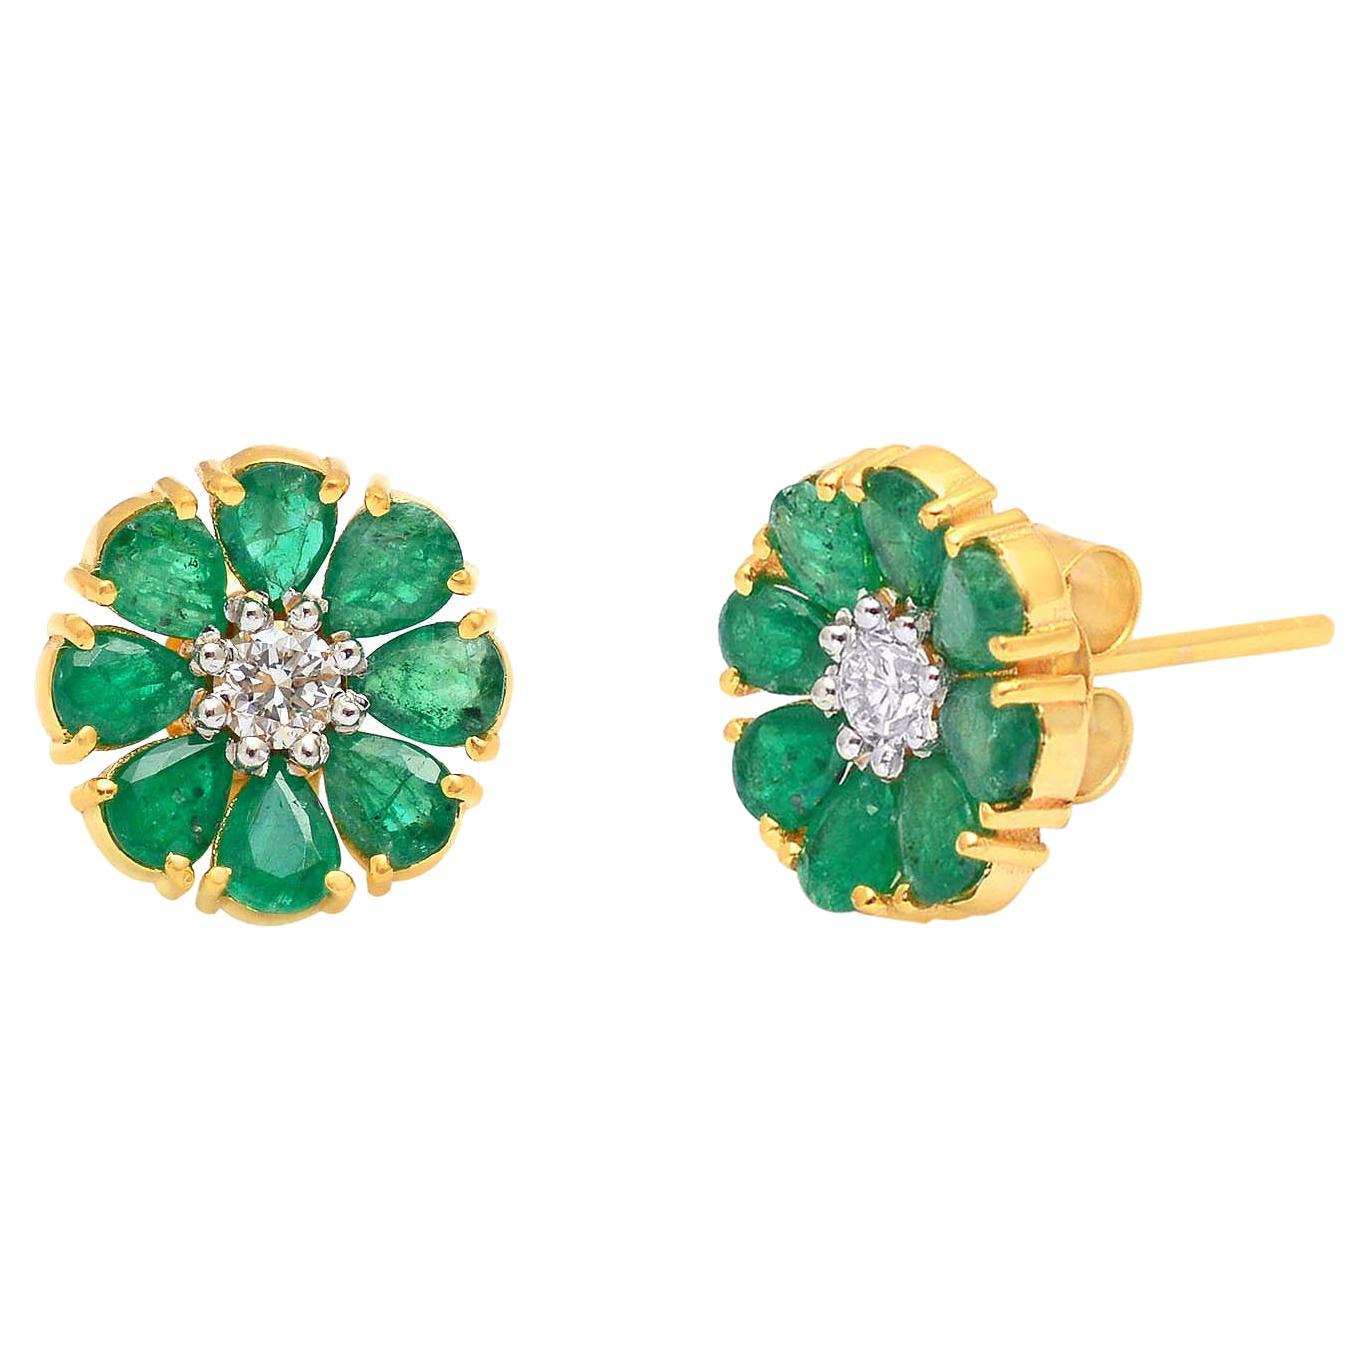 Emerald Stud Earrings with Diamond in 18k Gold